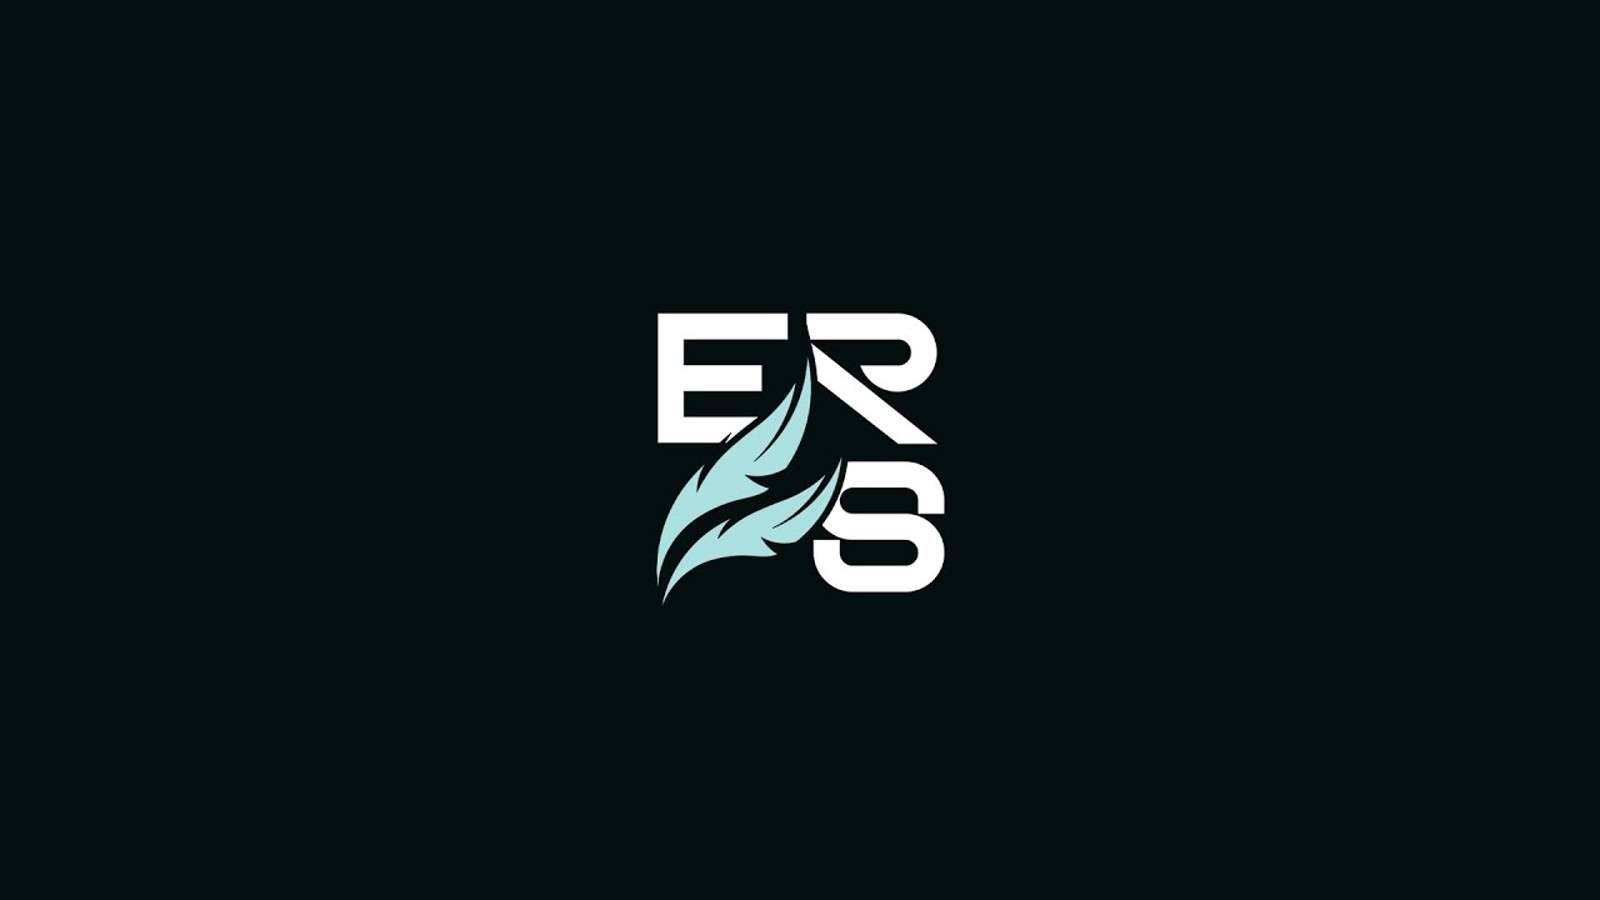 Project Eris logo